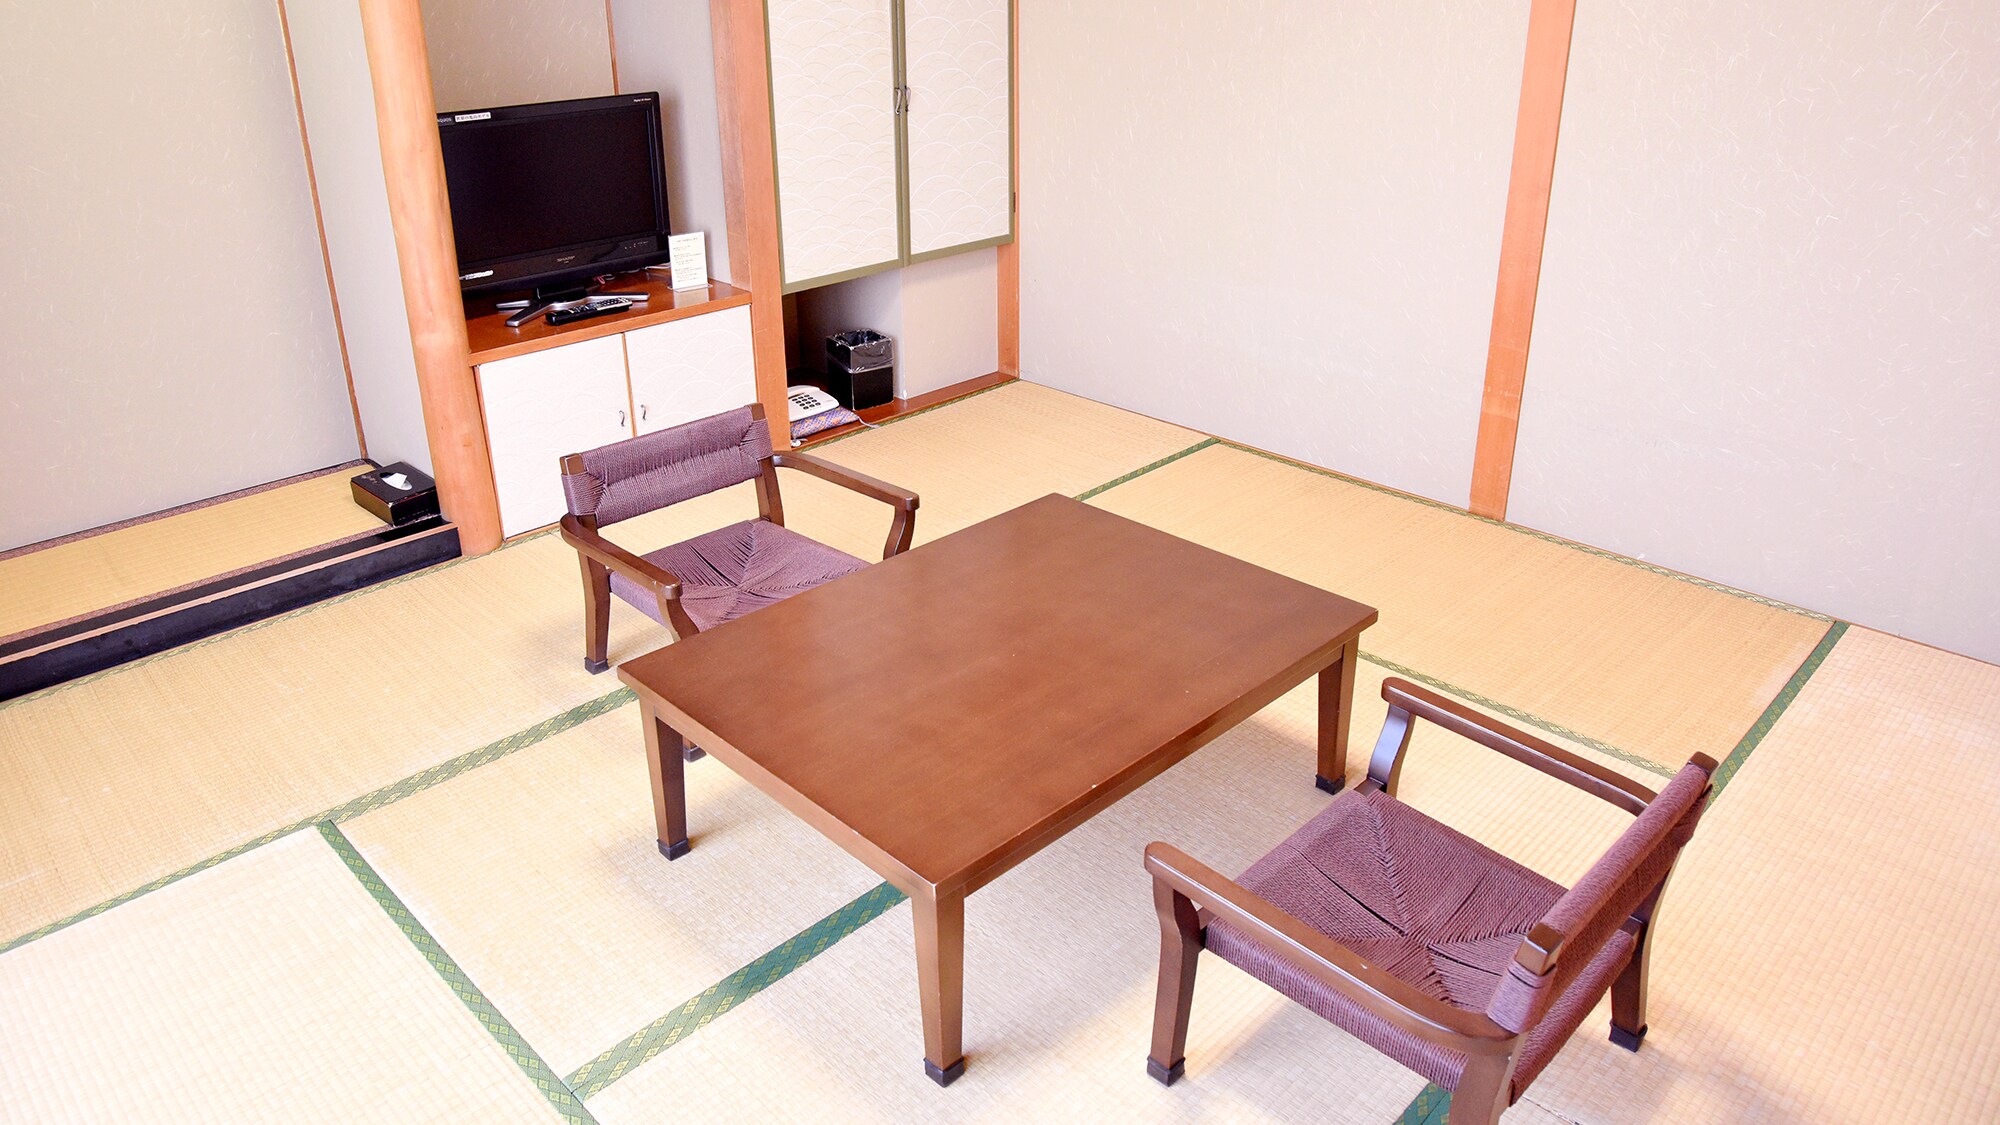 Japanese-style room 8 tatami mats